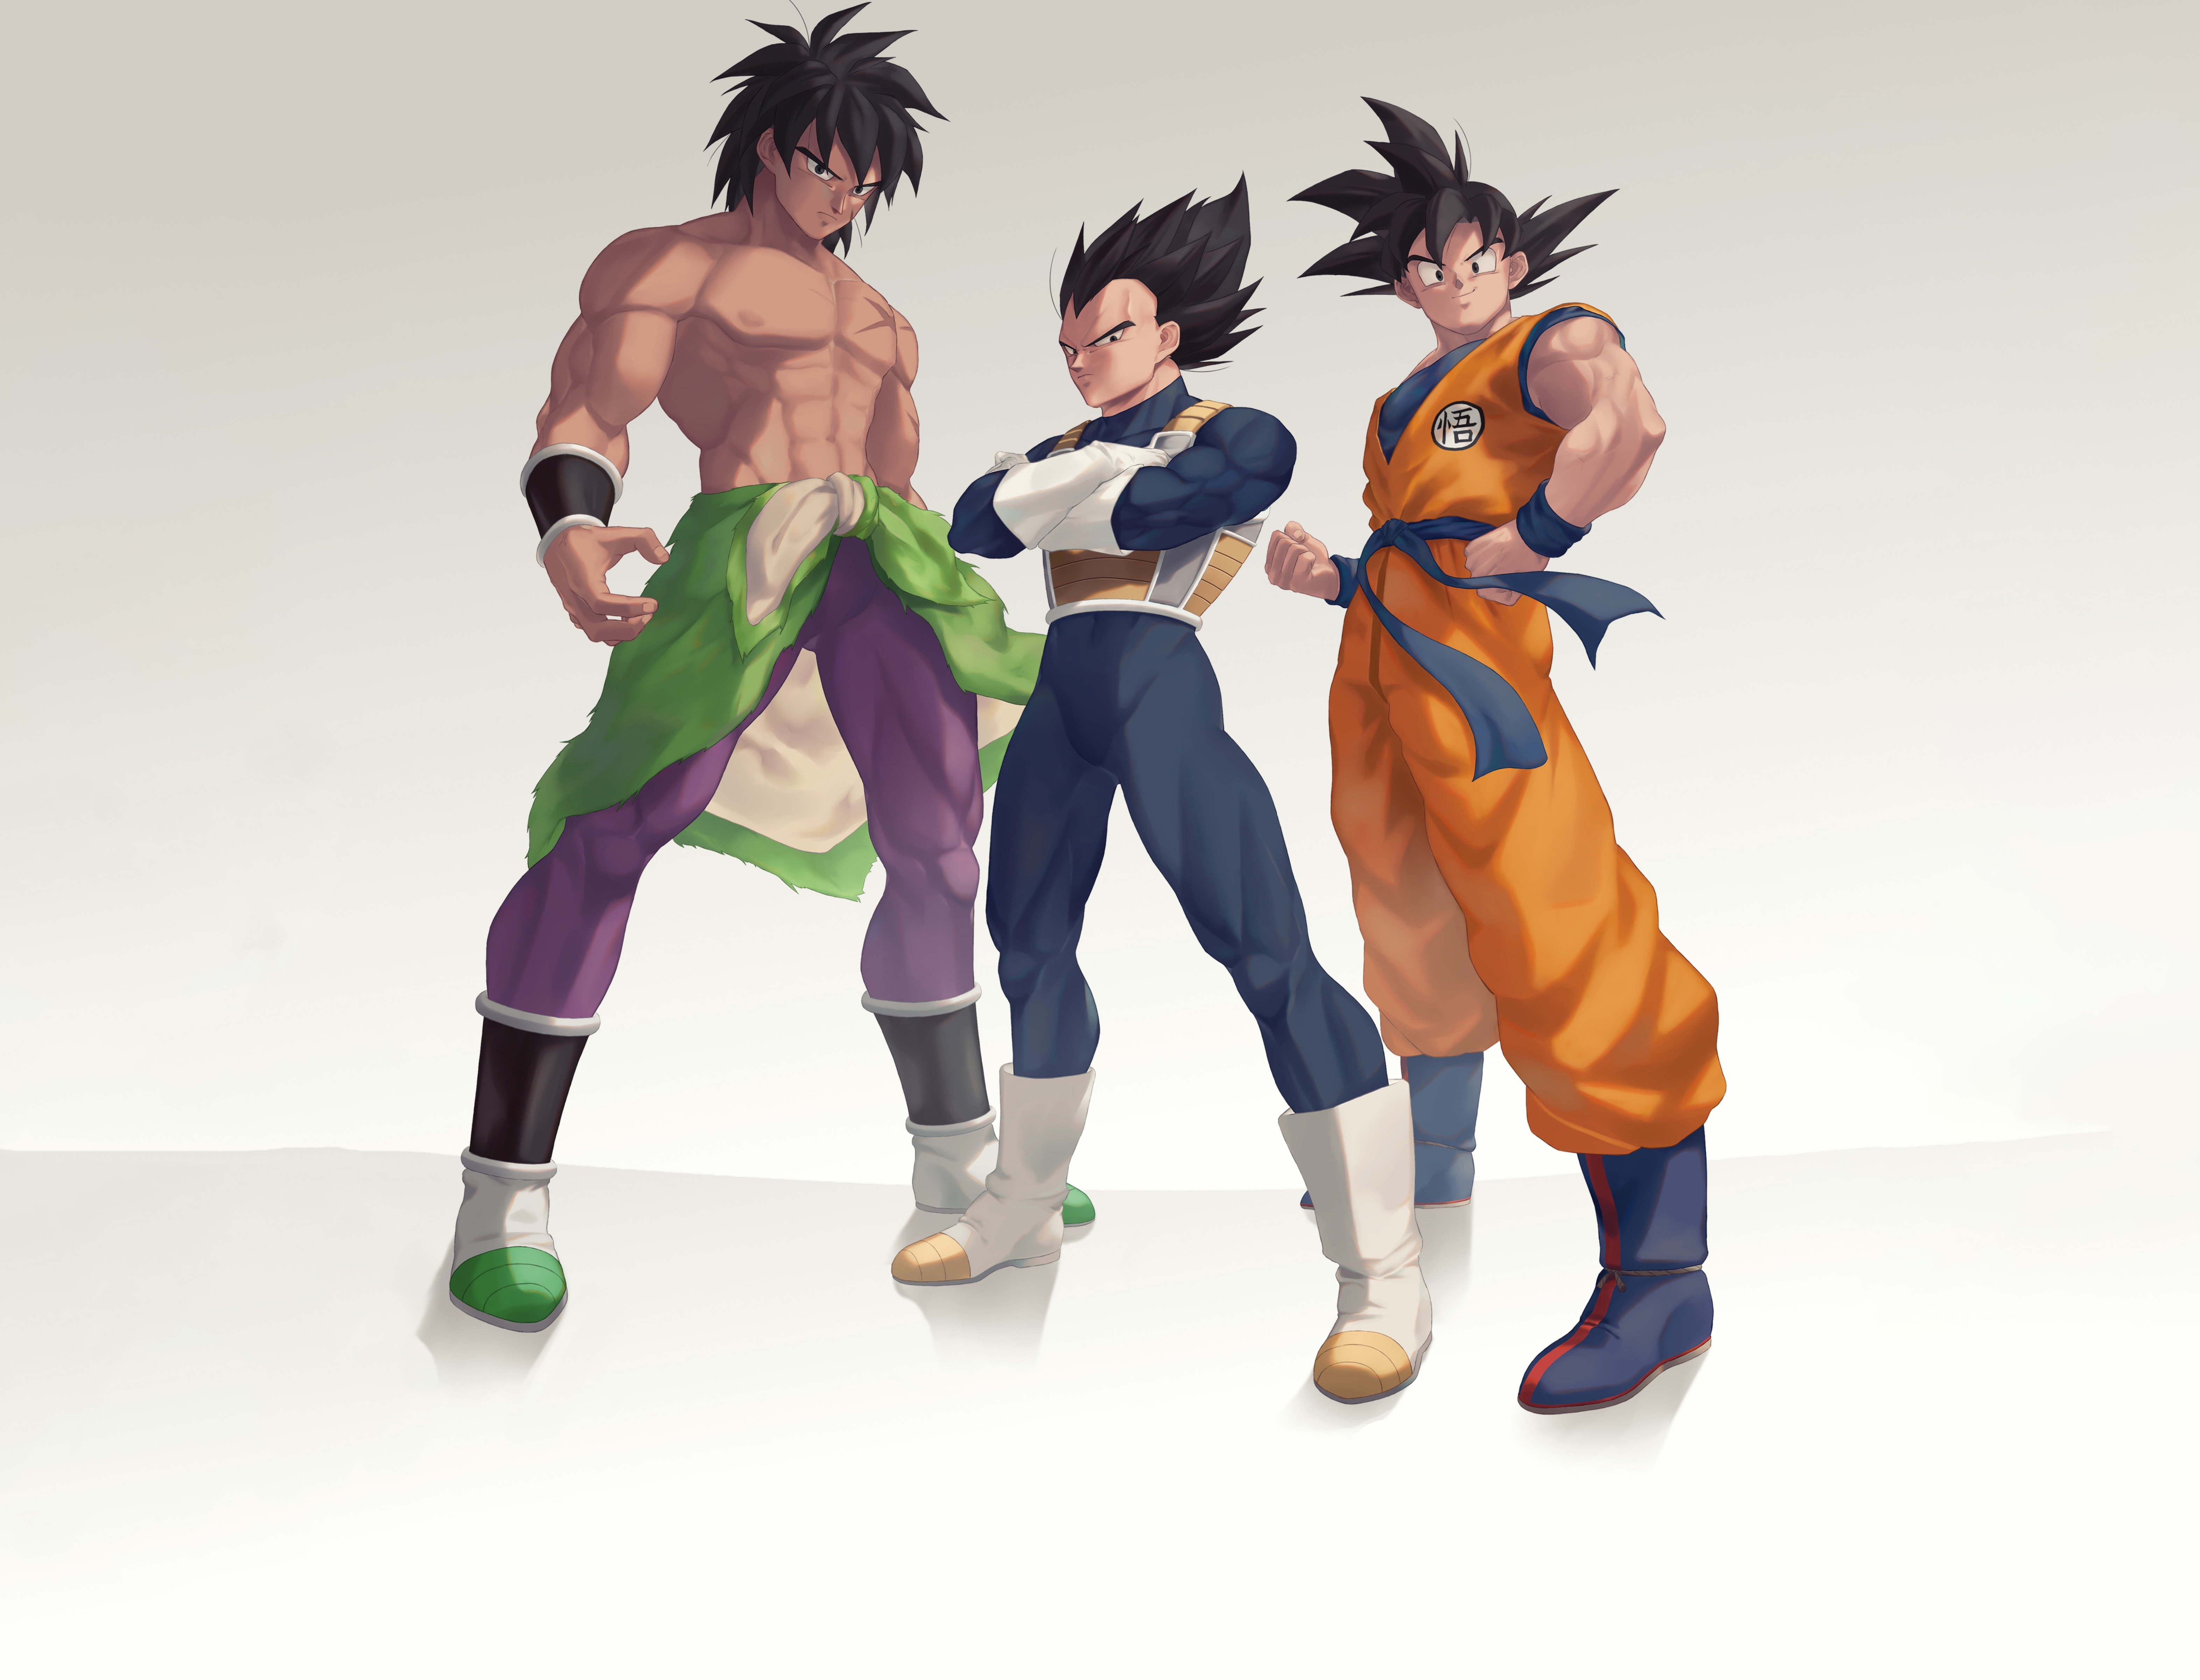 Super Saiyan Goku and Vegeta Blue iPhone Wallpaper - iPhone Wallpapers